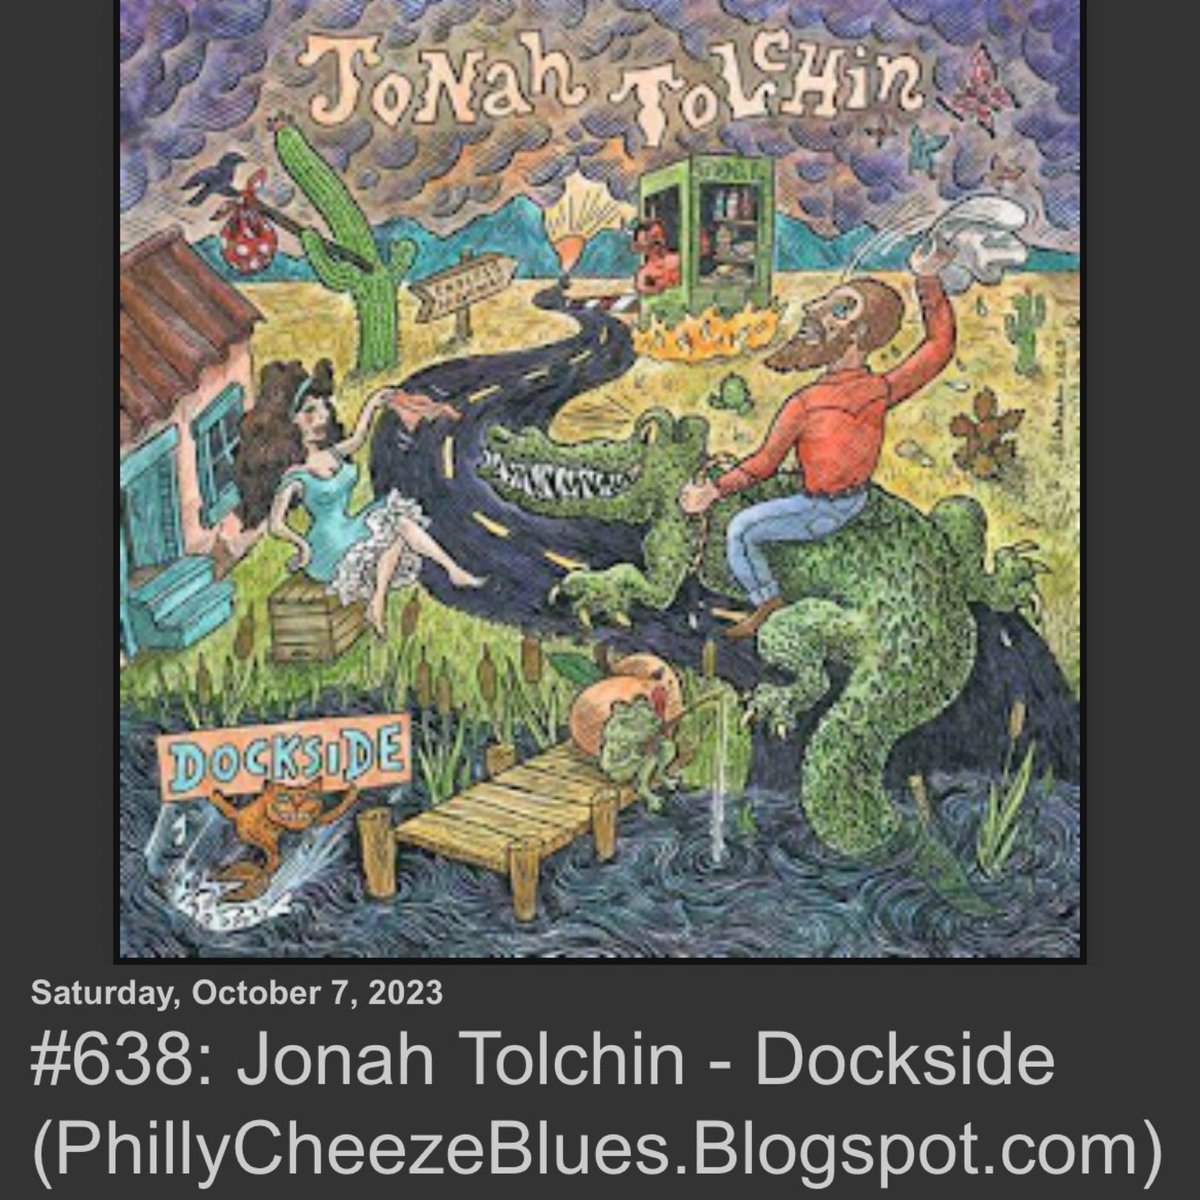 PhillyCheeze Rock & Blues Review # 638 Jonah Tolchin - Dockside 😎👍🎸🎸🎶🎶 phillycheezeblues.blogspot.com/2023/10/638-jo… #jonahtolchin #dockside #blues #bluesmusic #lutherdickinson #hillcountryblues #deltablues #newmusic #newblues #bluesmusic @jonahtolchin @LutherDickinson @harmonicaboy